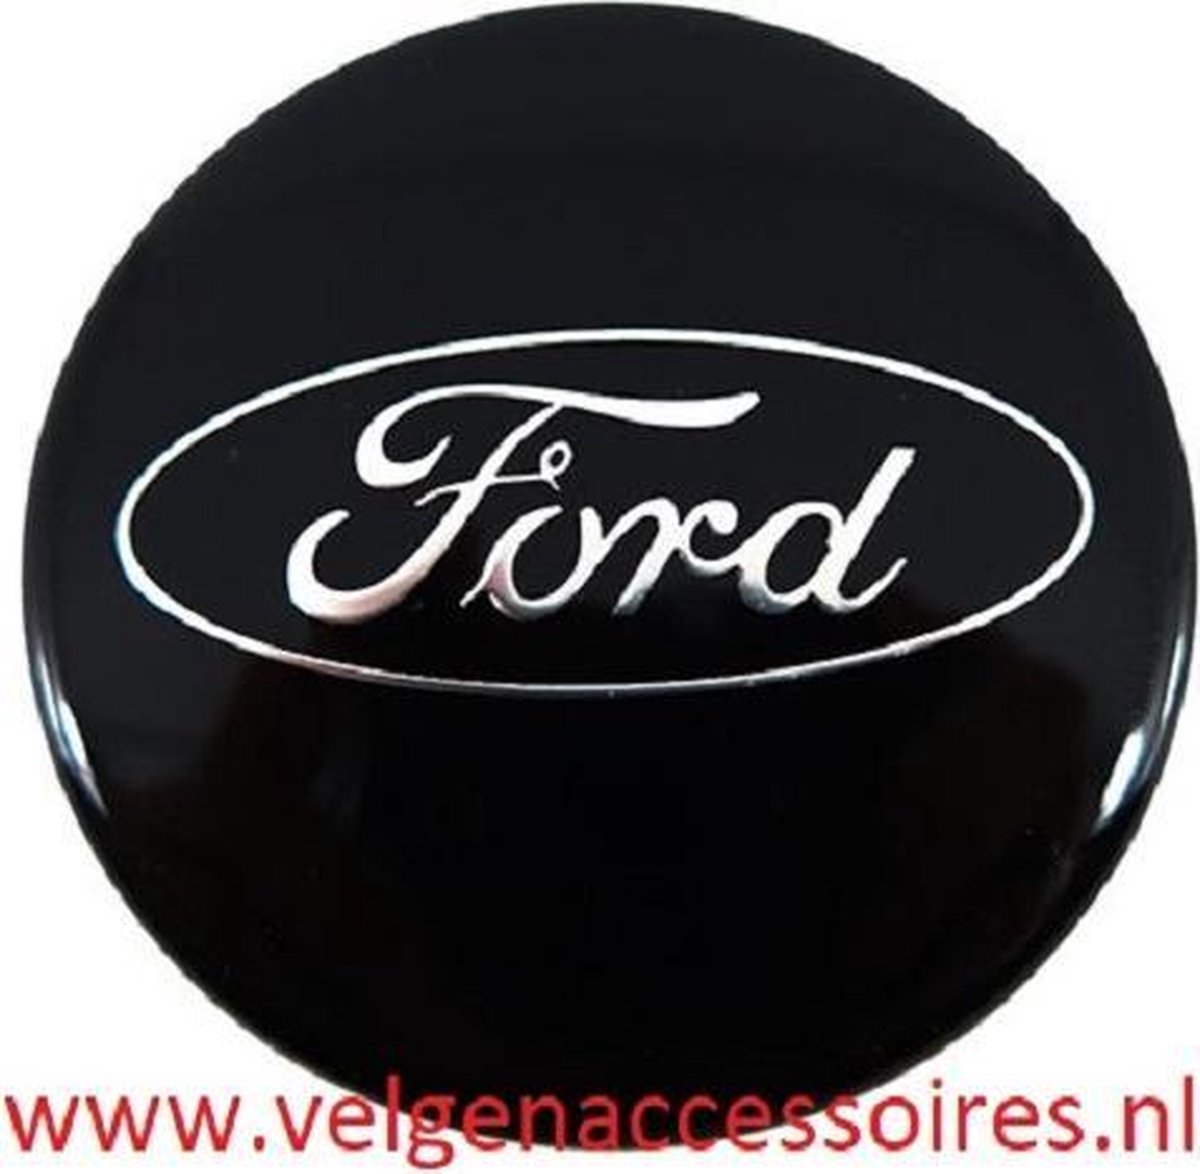 Ford naafdoppen 54mm zwart - Set van 4 stuks Naafdoppen -Naafkappen - Velgen - Winterbanden - Velg - All season banden - Ontvochtiger - Ruitenkrabber - Vorst - Regen - stickers - logo - embleem - Velgenaccessoires.nl